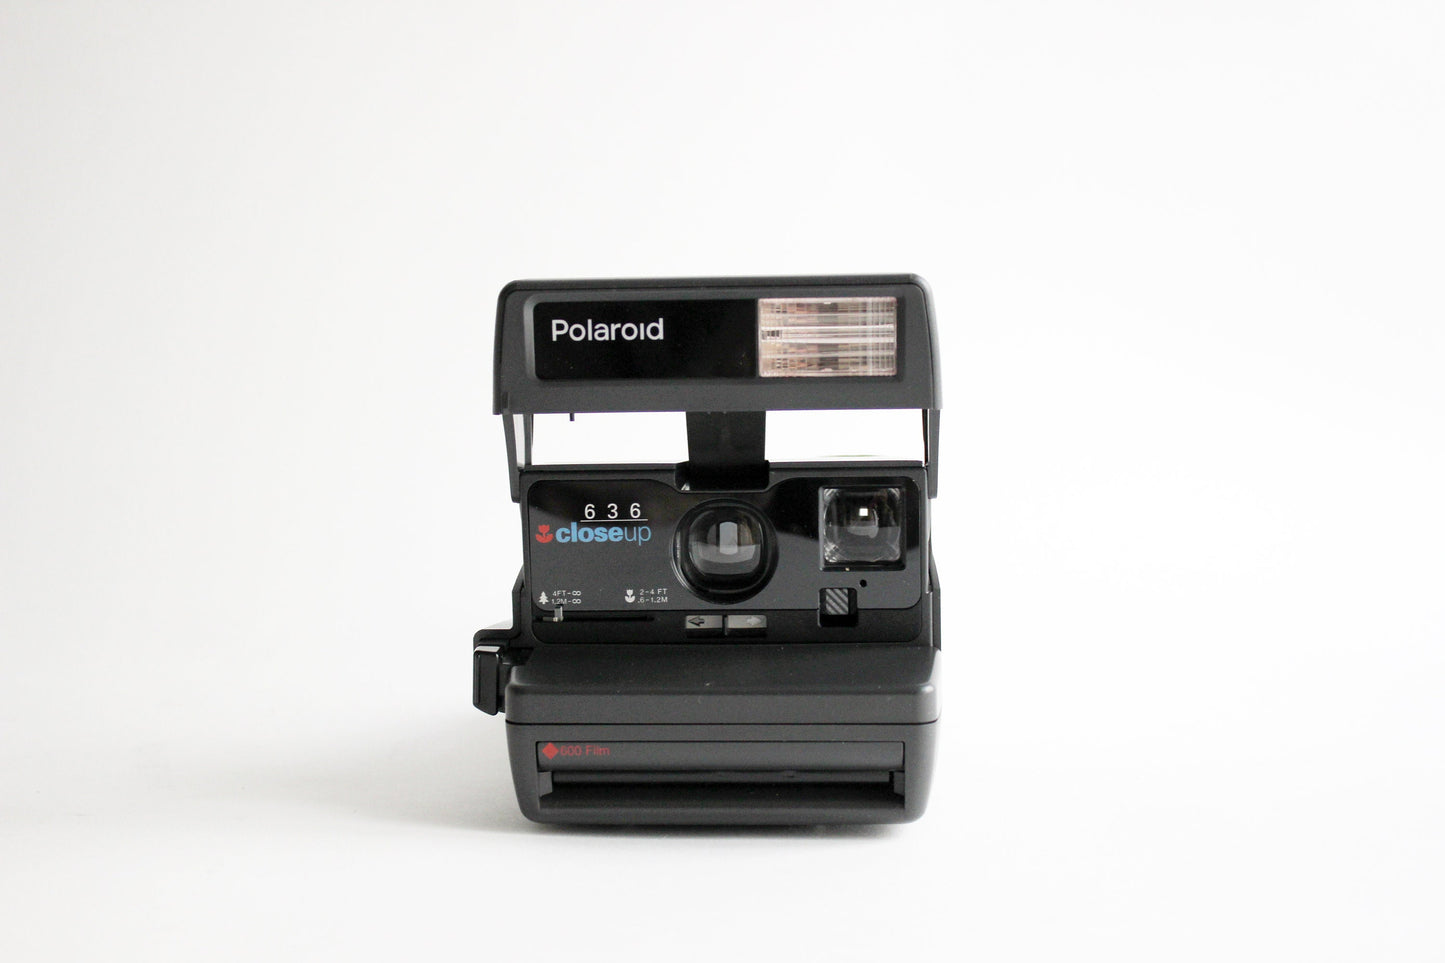 Polaroid One Step Close Up 636 Vintage Instant Camera